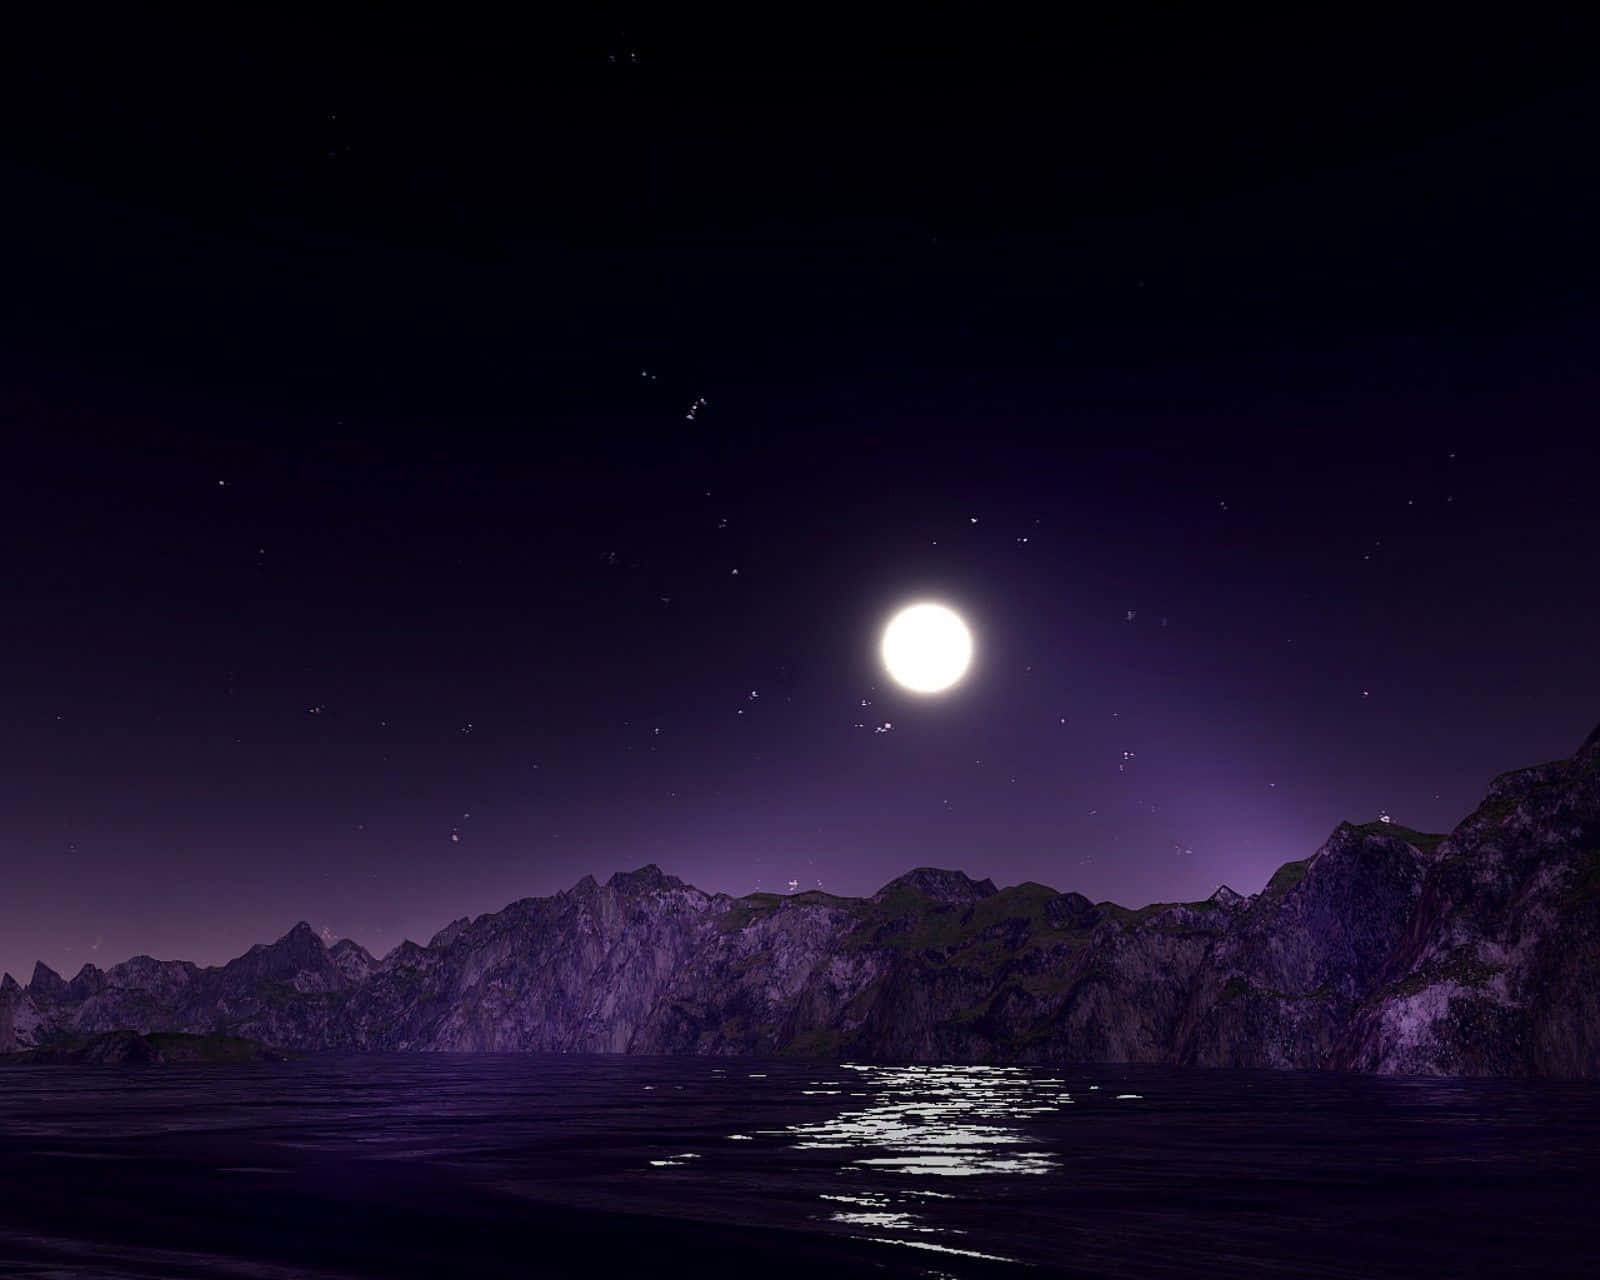 Moonlight serenade in the cosmic sky